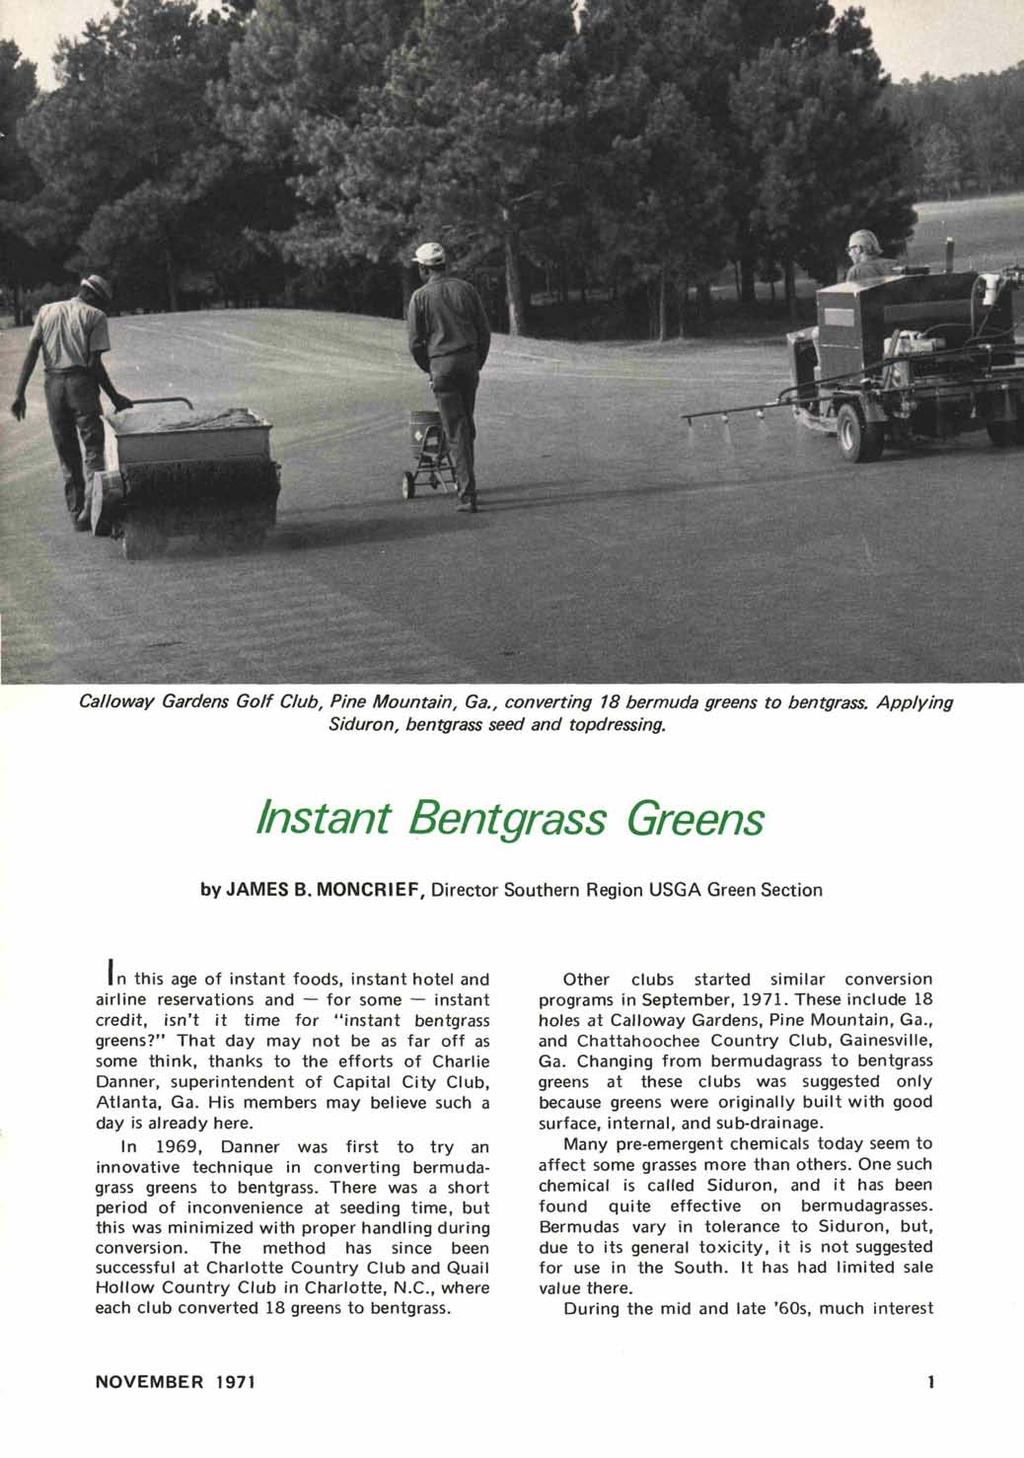 Calloway Gardens Golf Club, Pine Mountain, Ga., converting 18 bermuda greens to bentgrass. Applying Siduron, bentgrass seed and topdressing. Instant 8entgrass Greens by JAMES B.